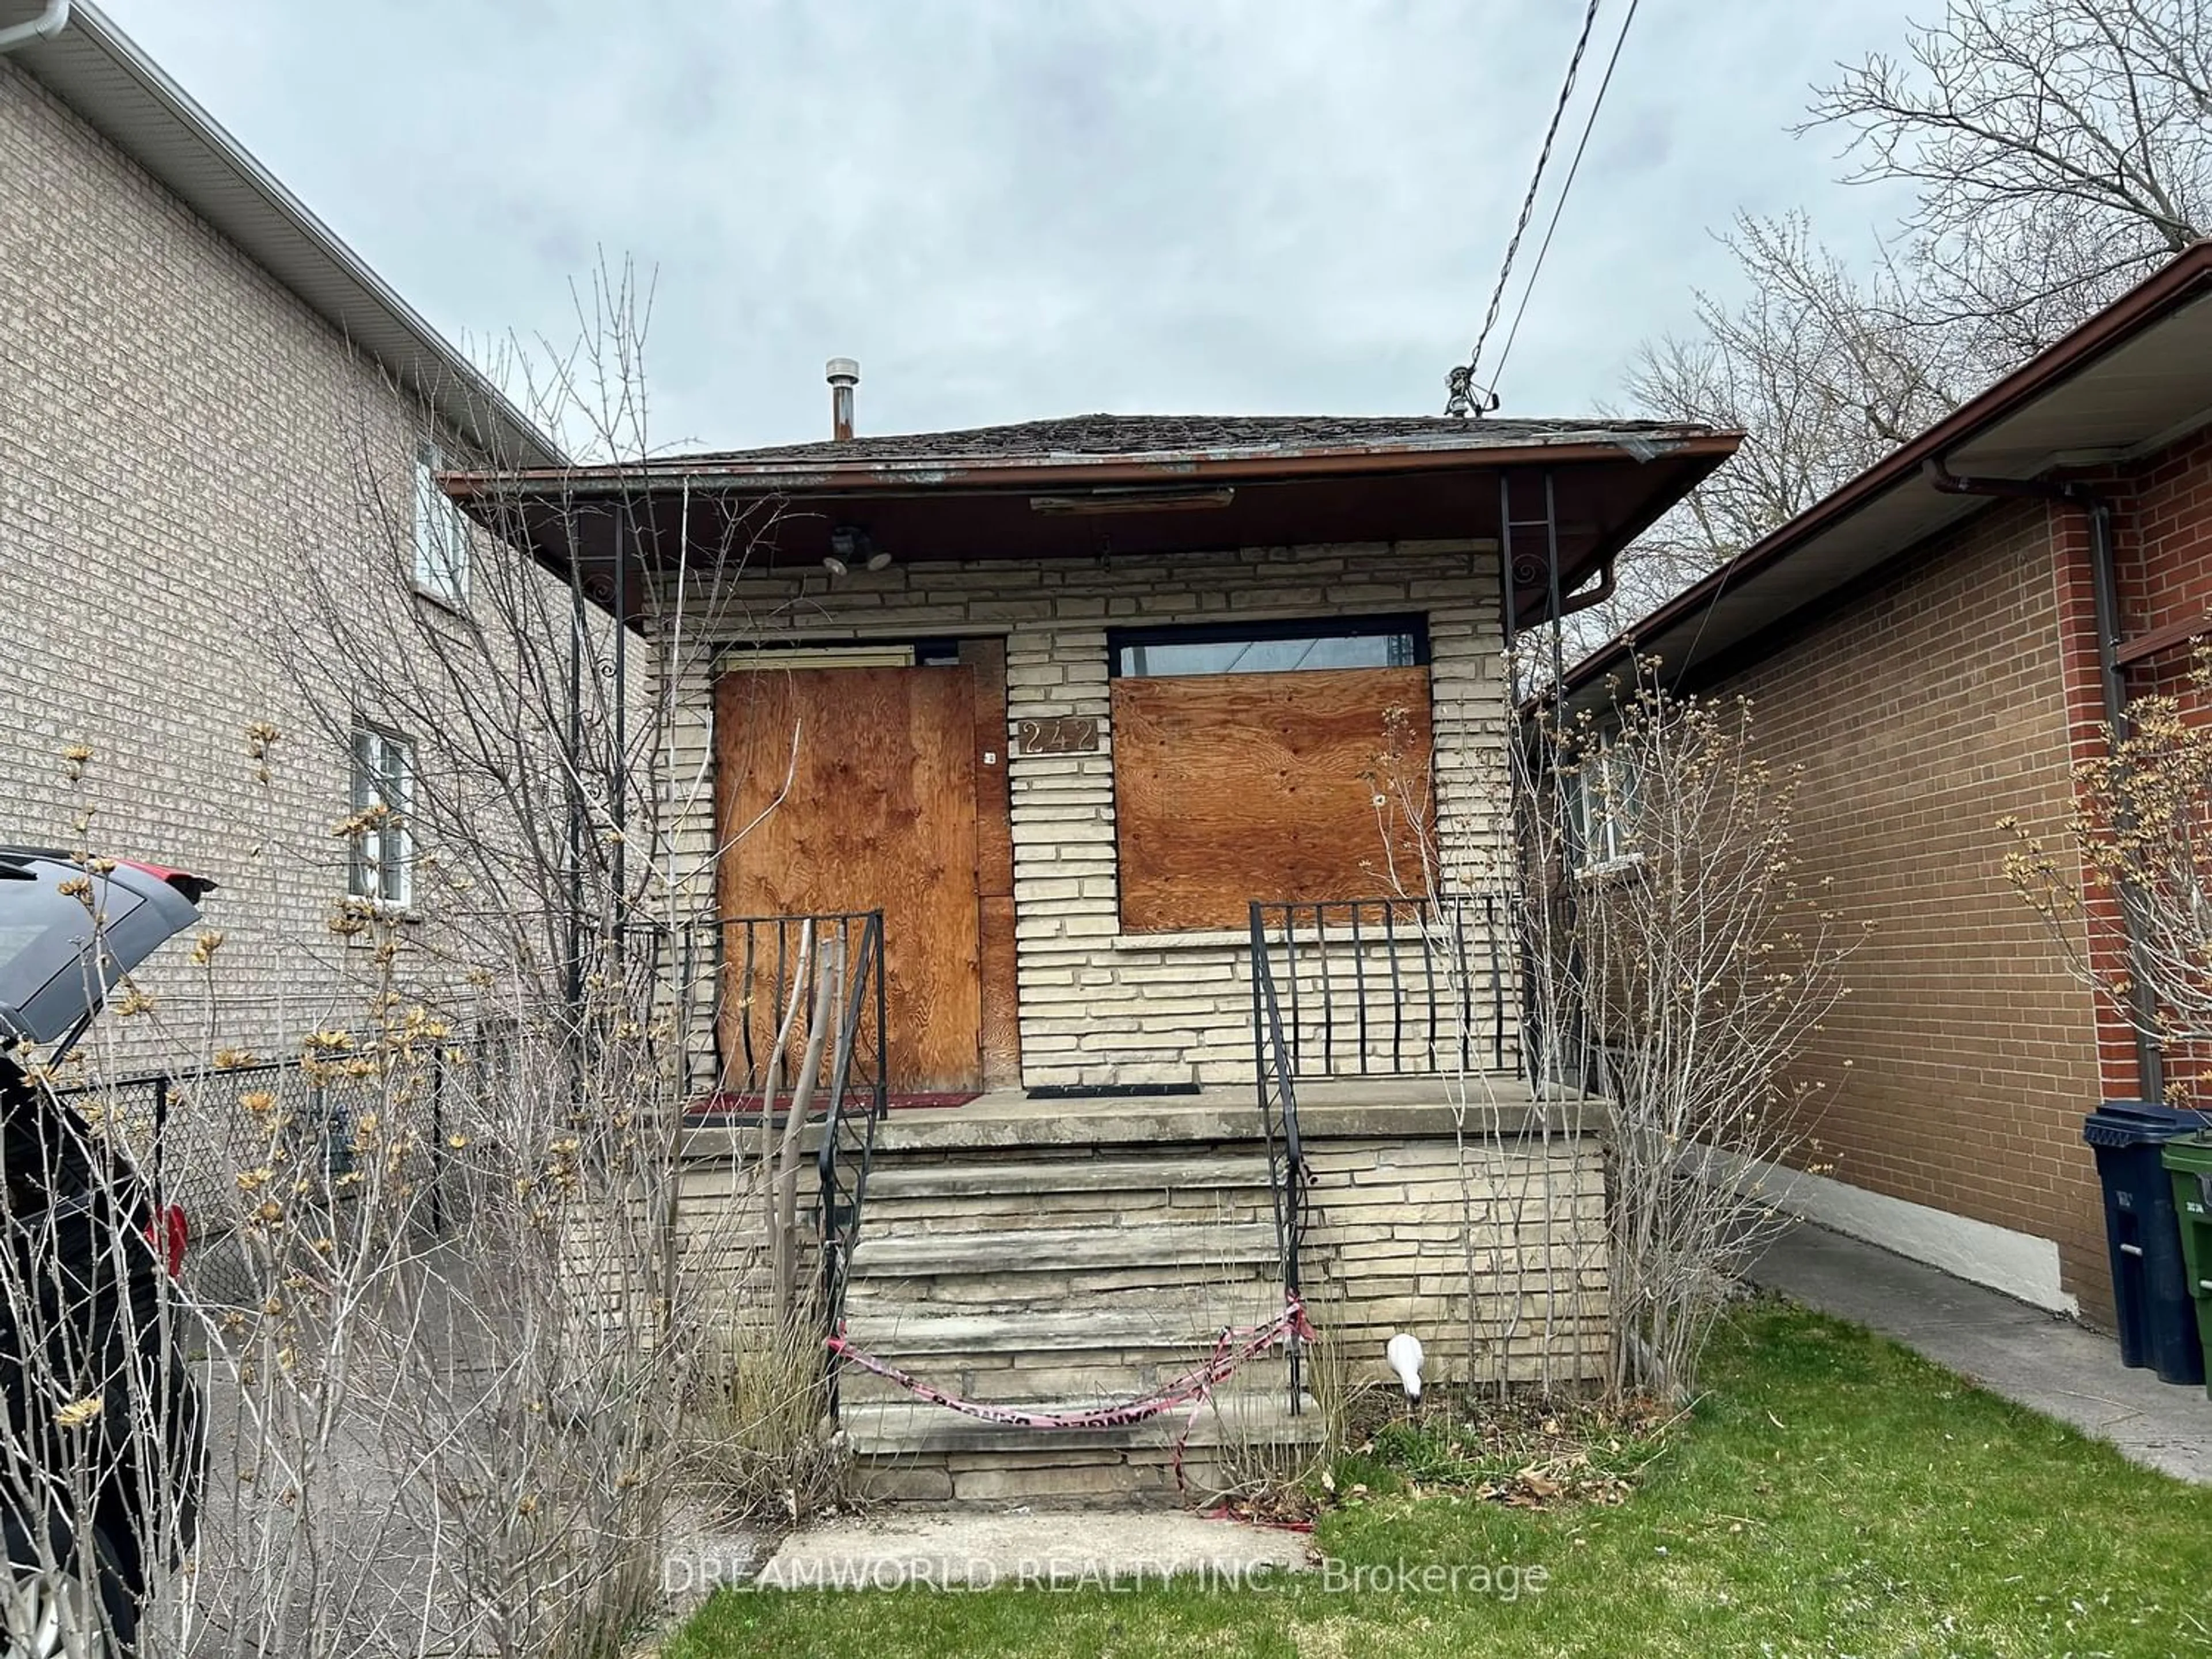 Frontside or backside of a home for 242 Glen Park Ave, Toronto Ontario M6B 2E3